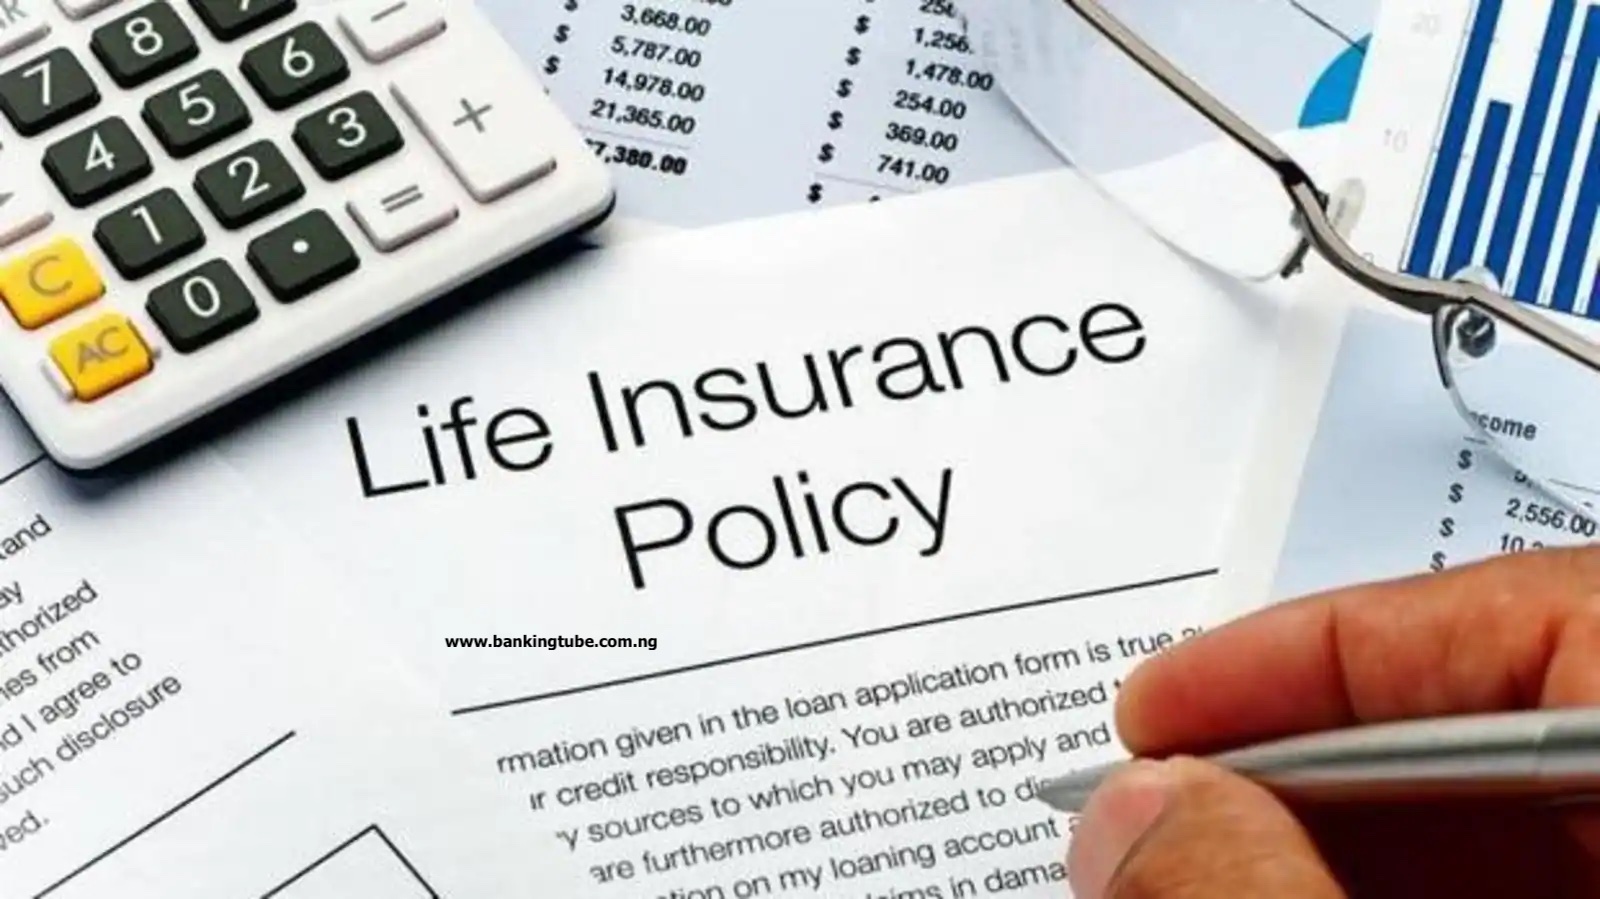 Life Insurance Policy Limitations